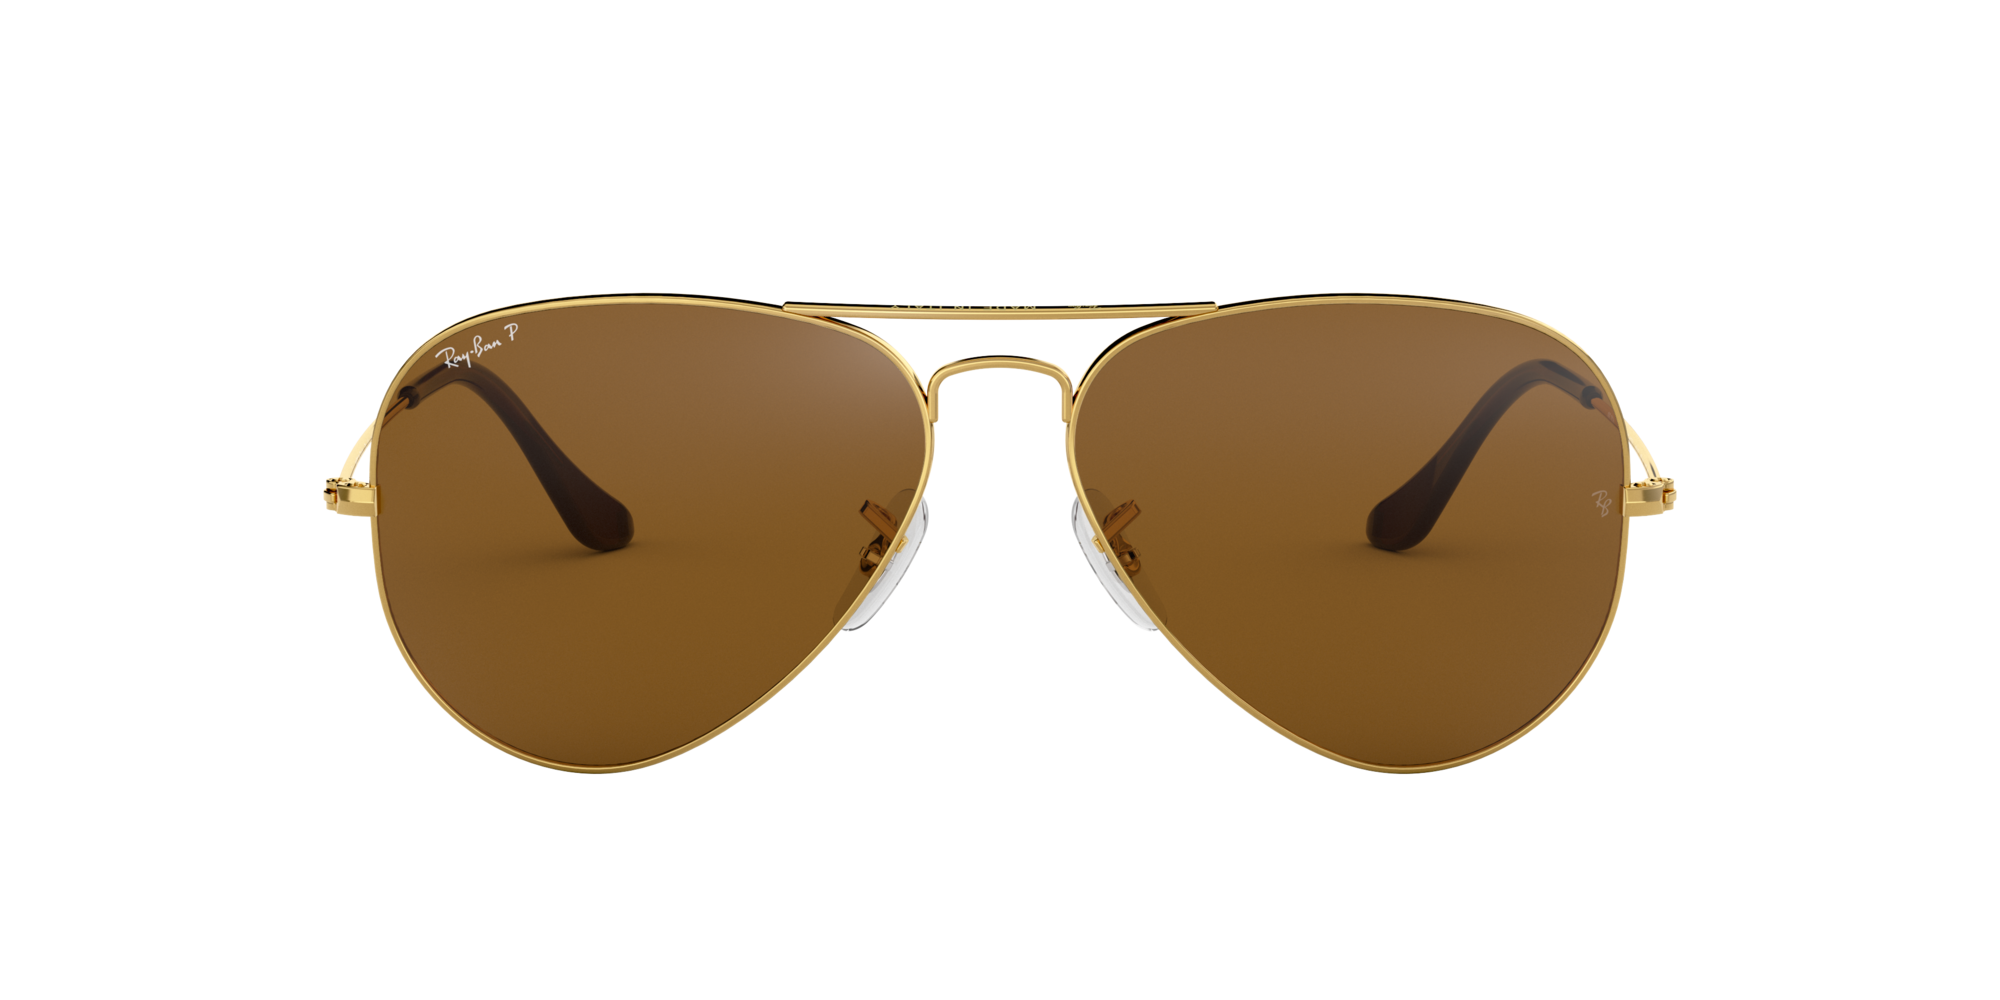 ray ban brown polarized sunglasses